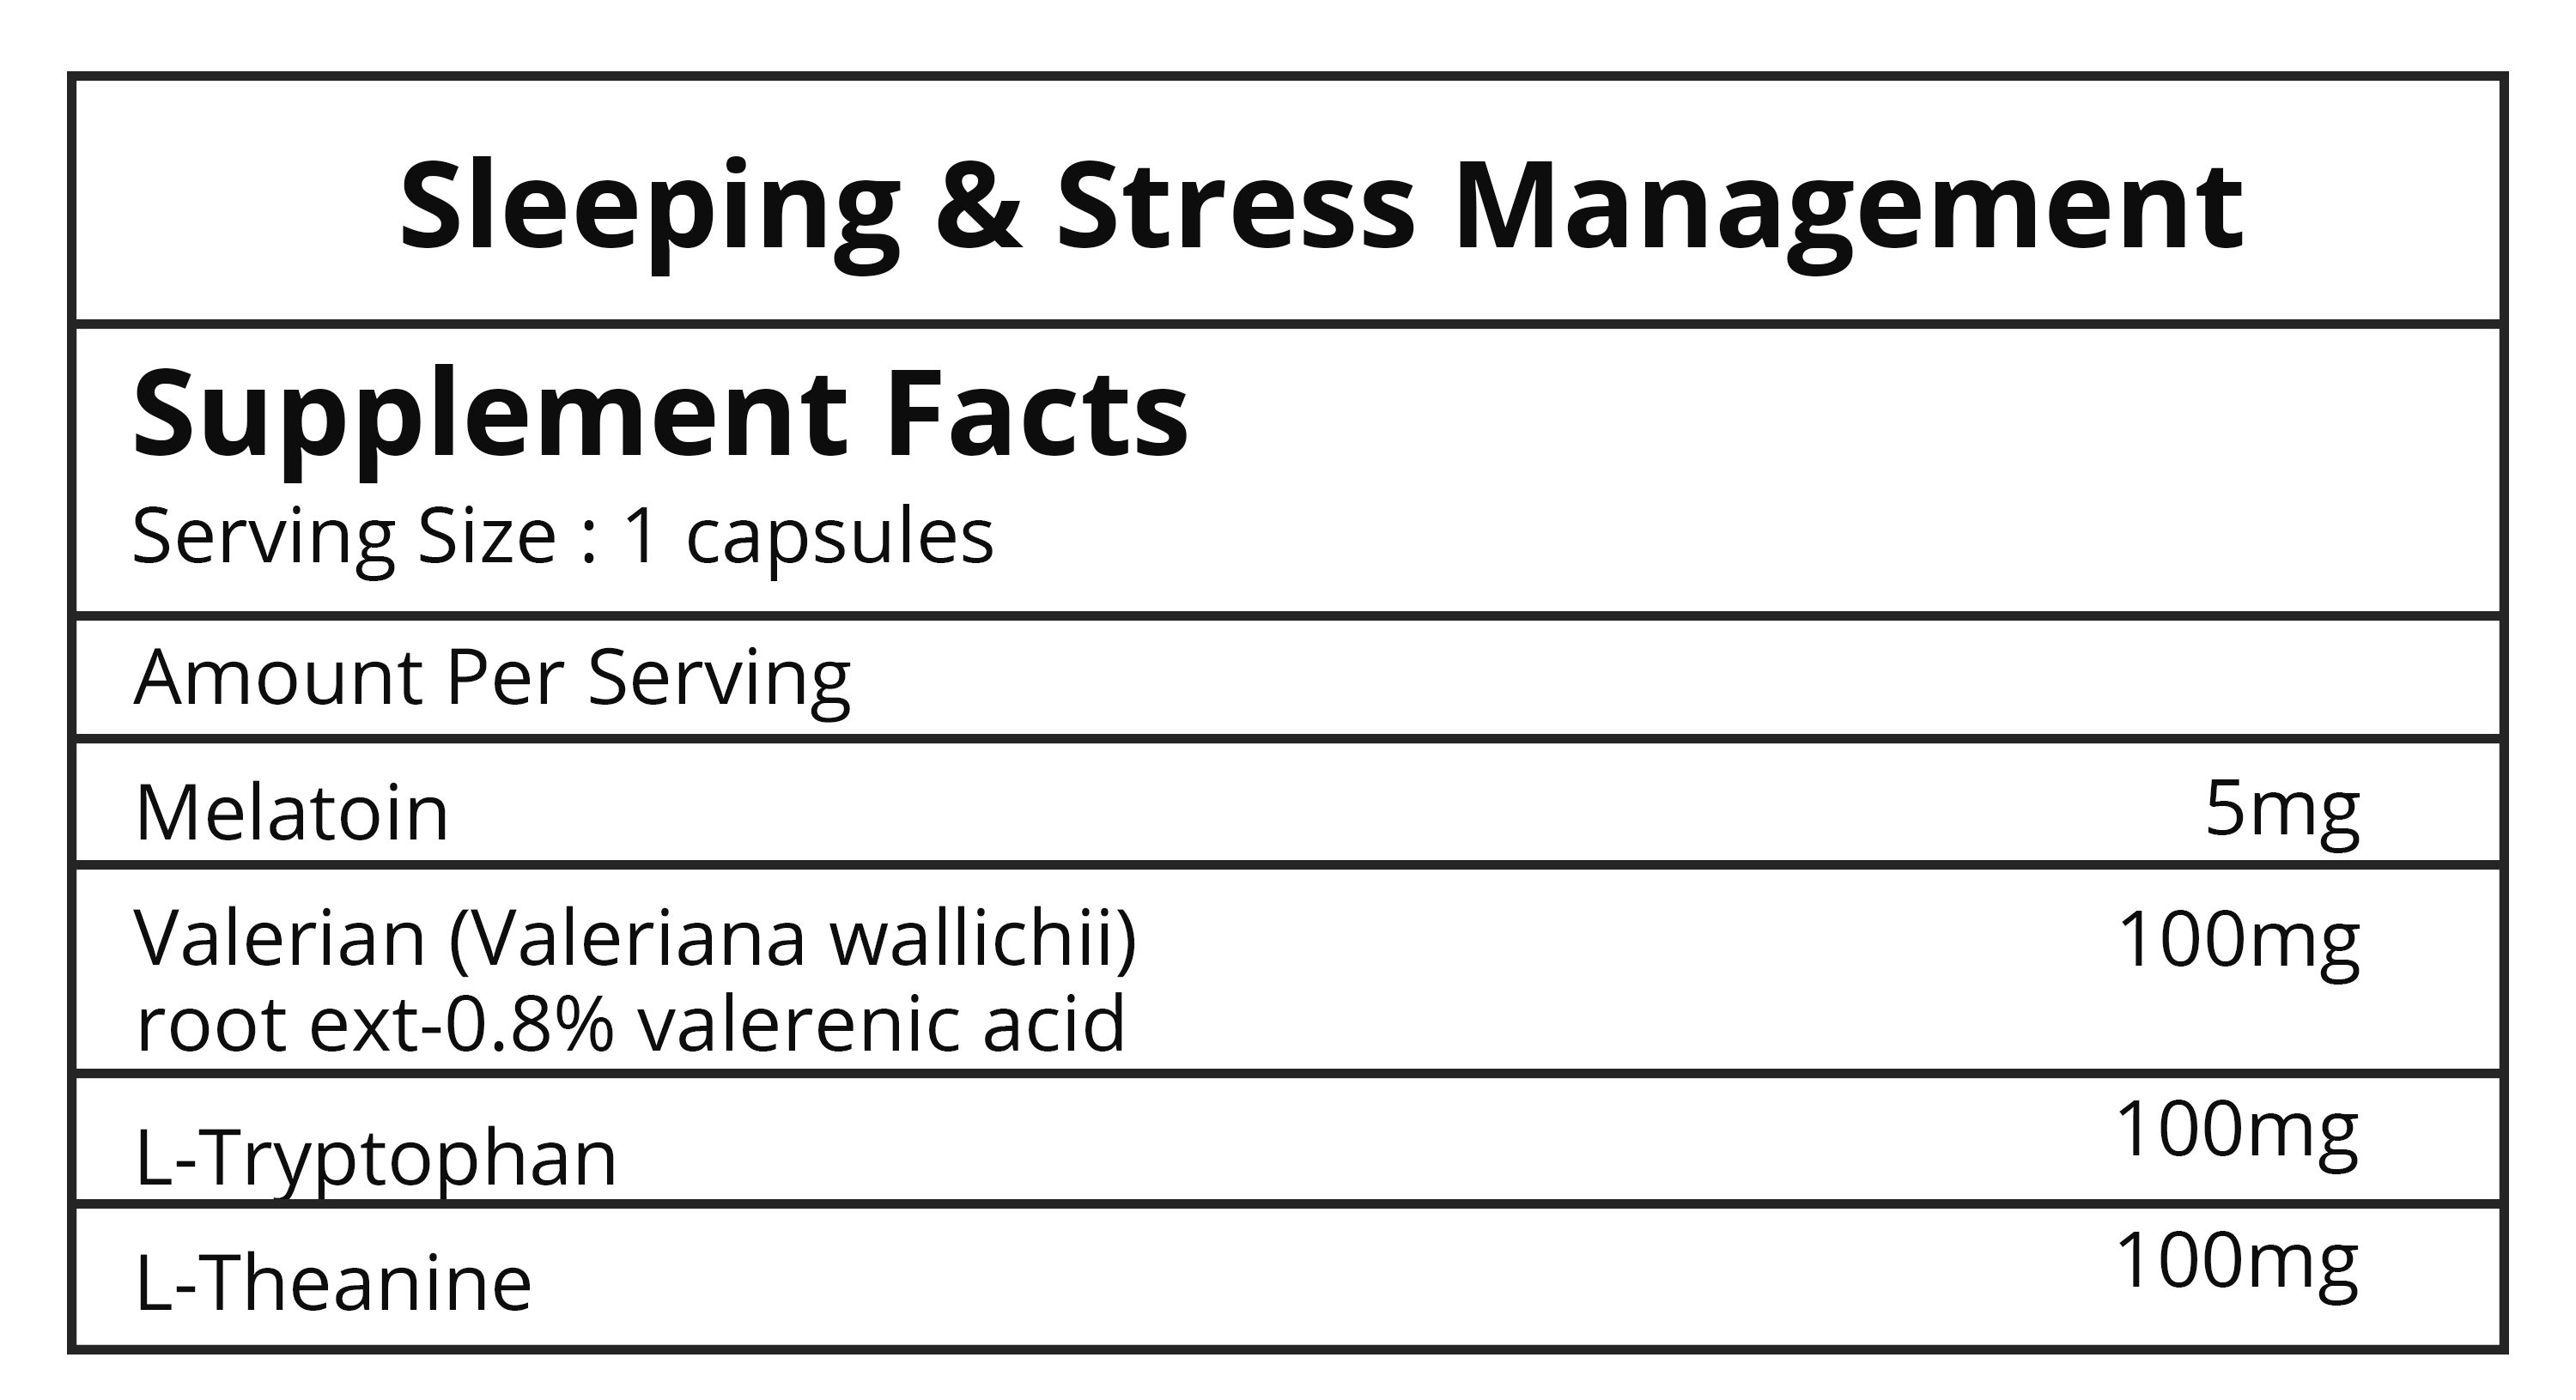 Sleeping & Stress Management